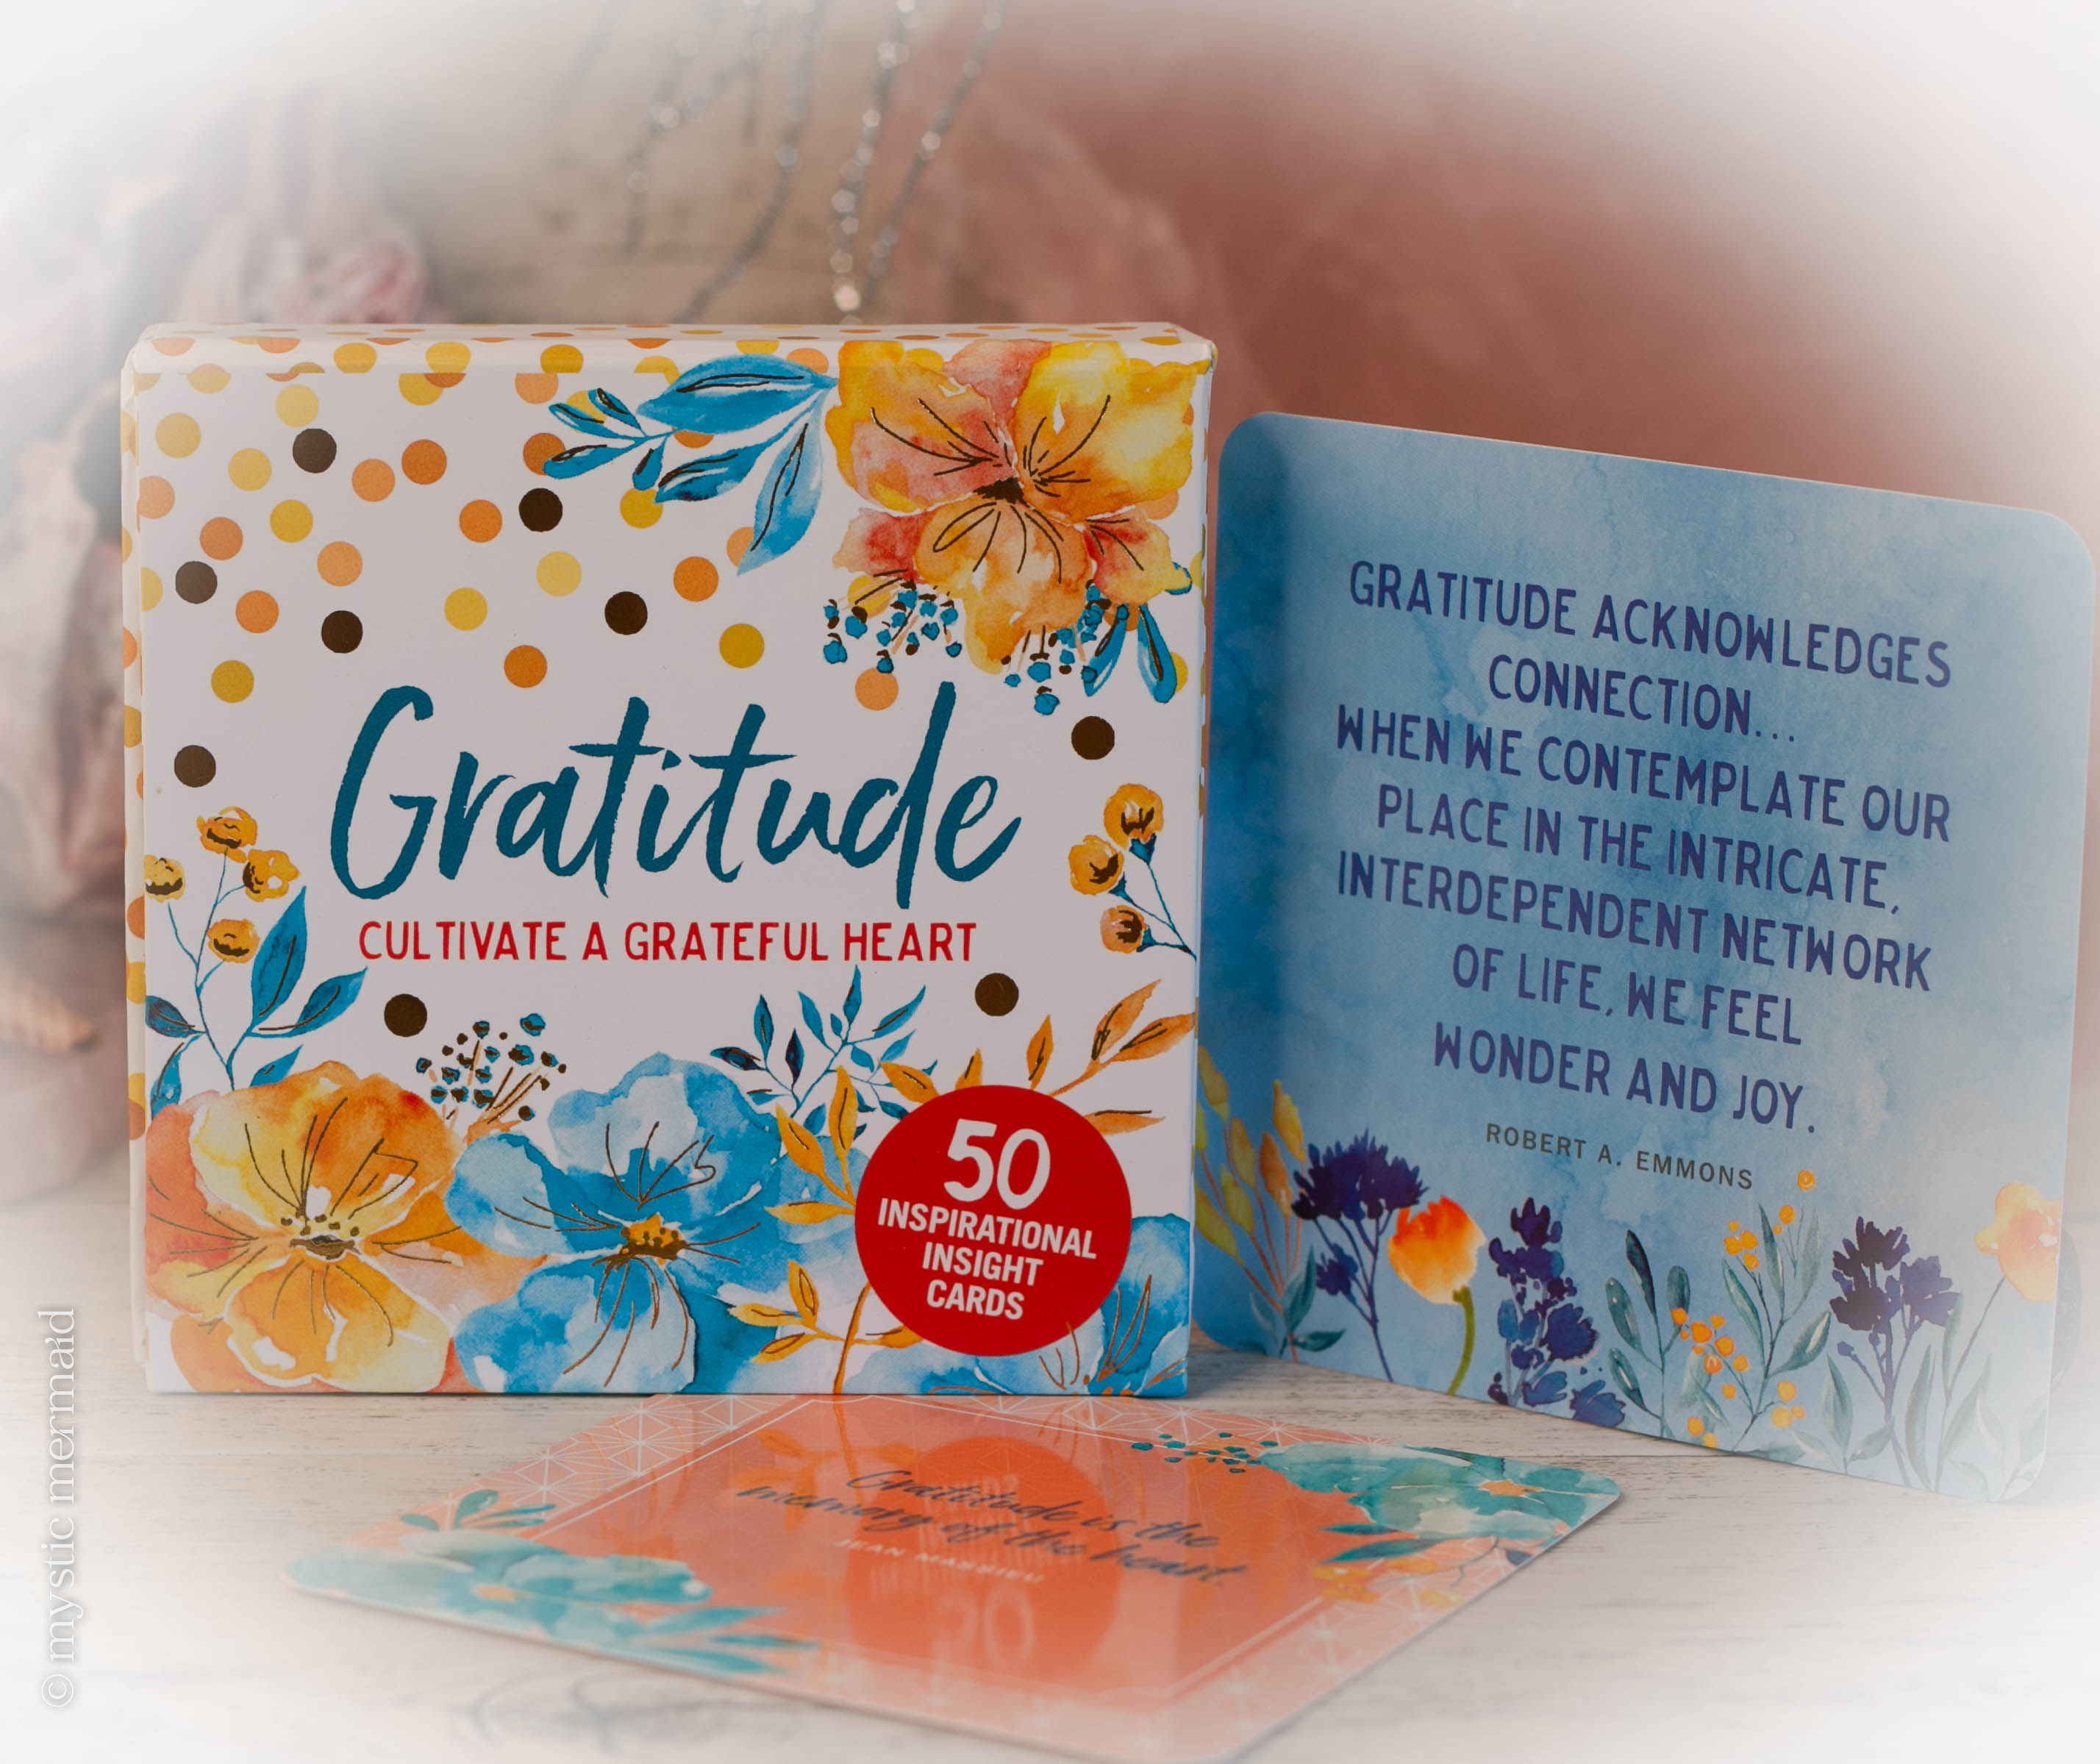 Gratitude ~ Cultivate a Grateful Heart - Inspirational Insight Cards